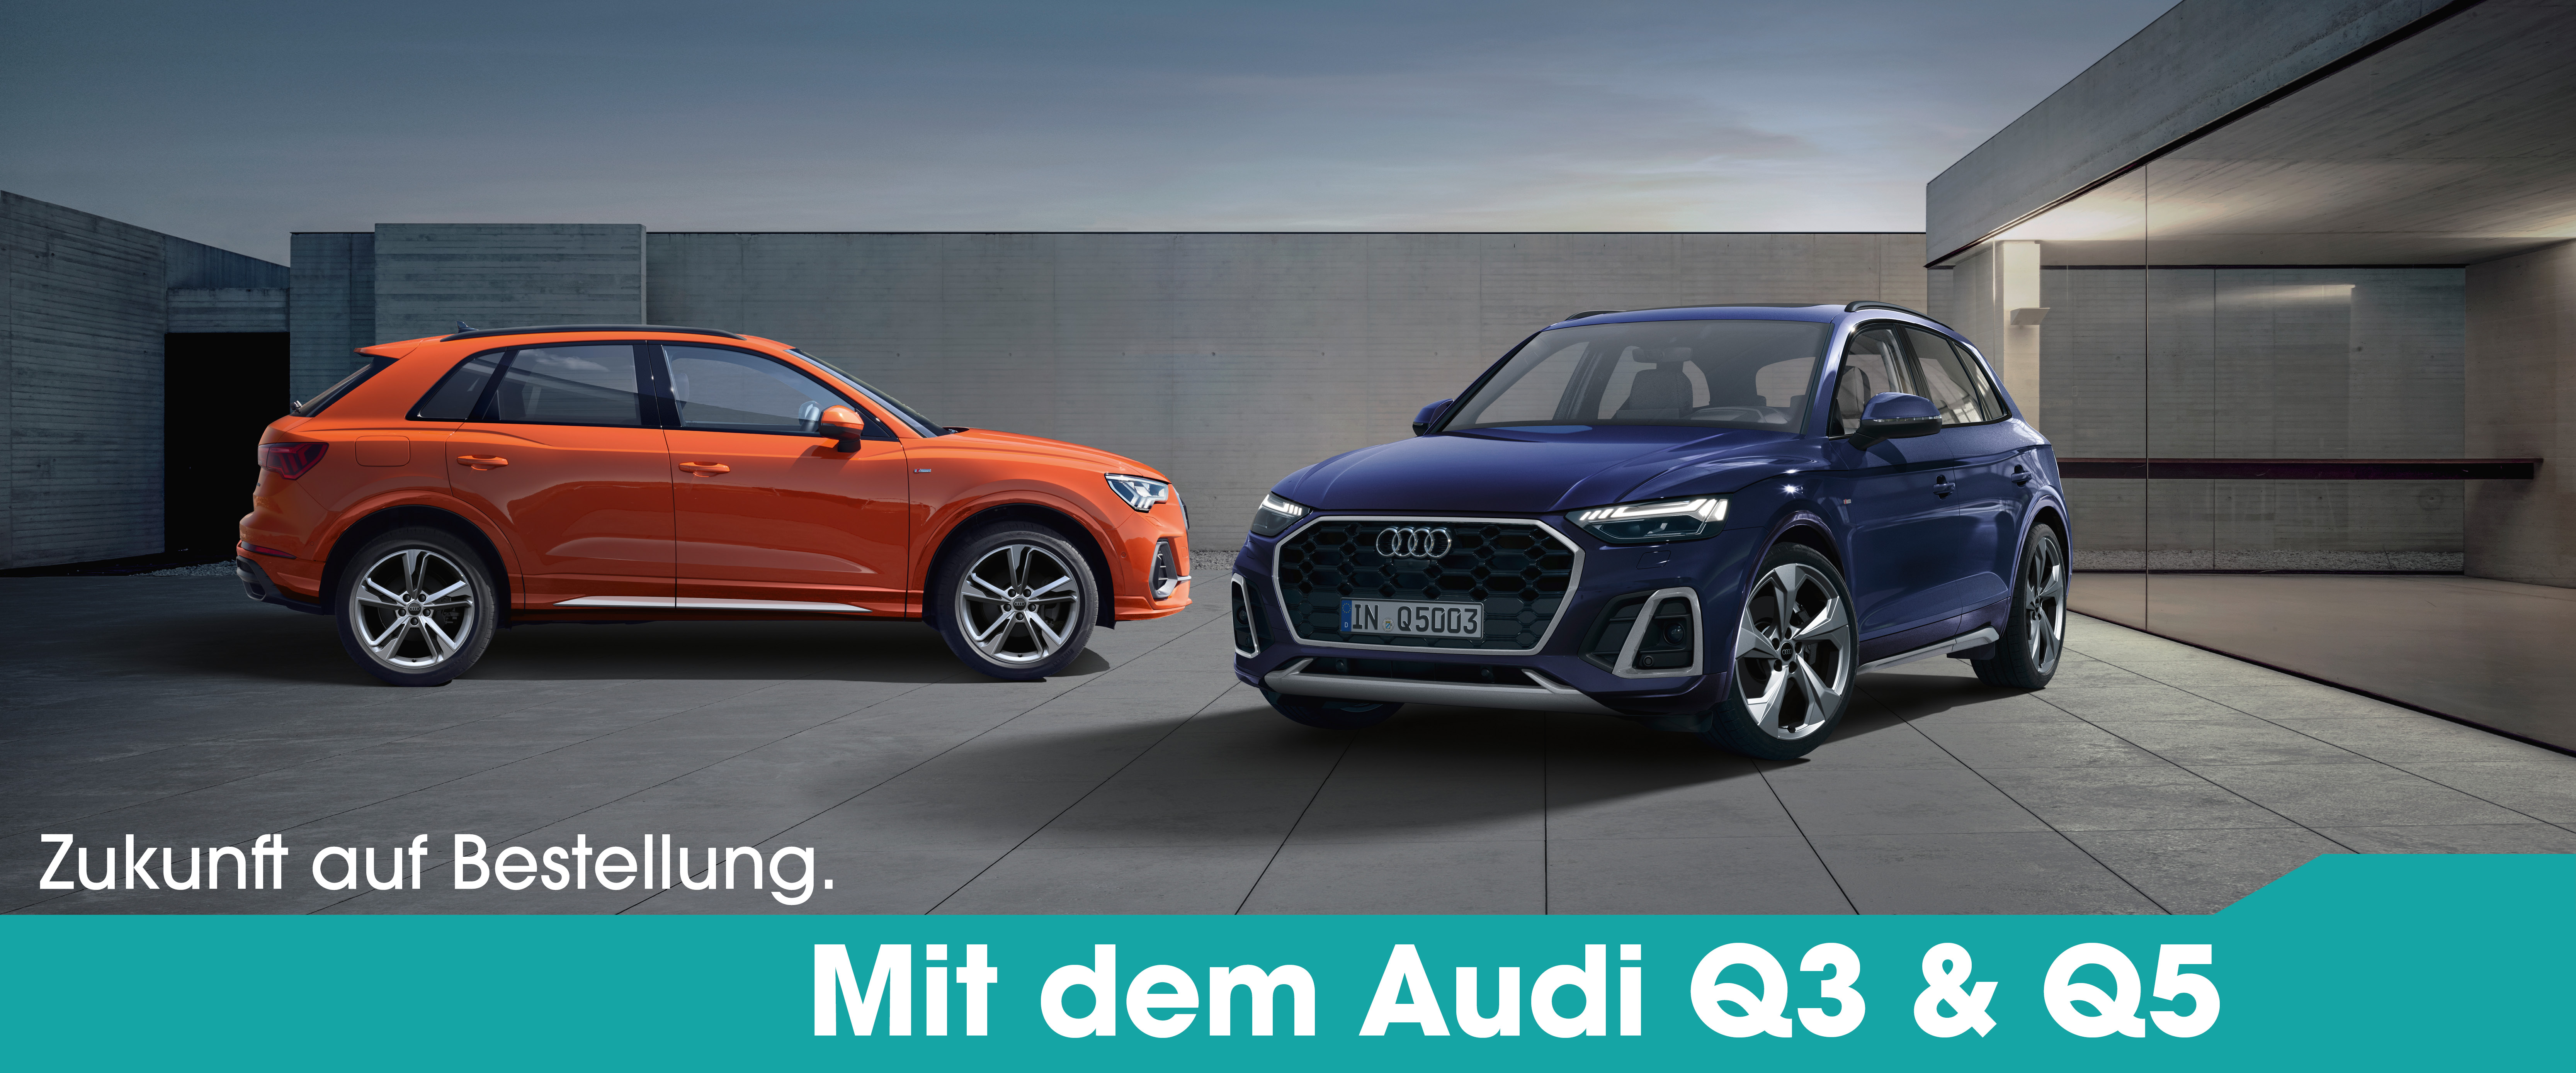 Audi Bestellaktion Q3 & Q5